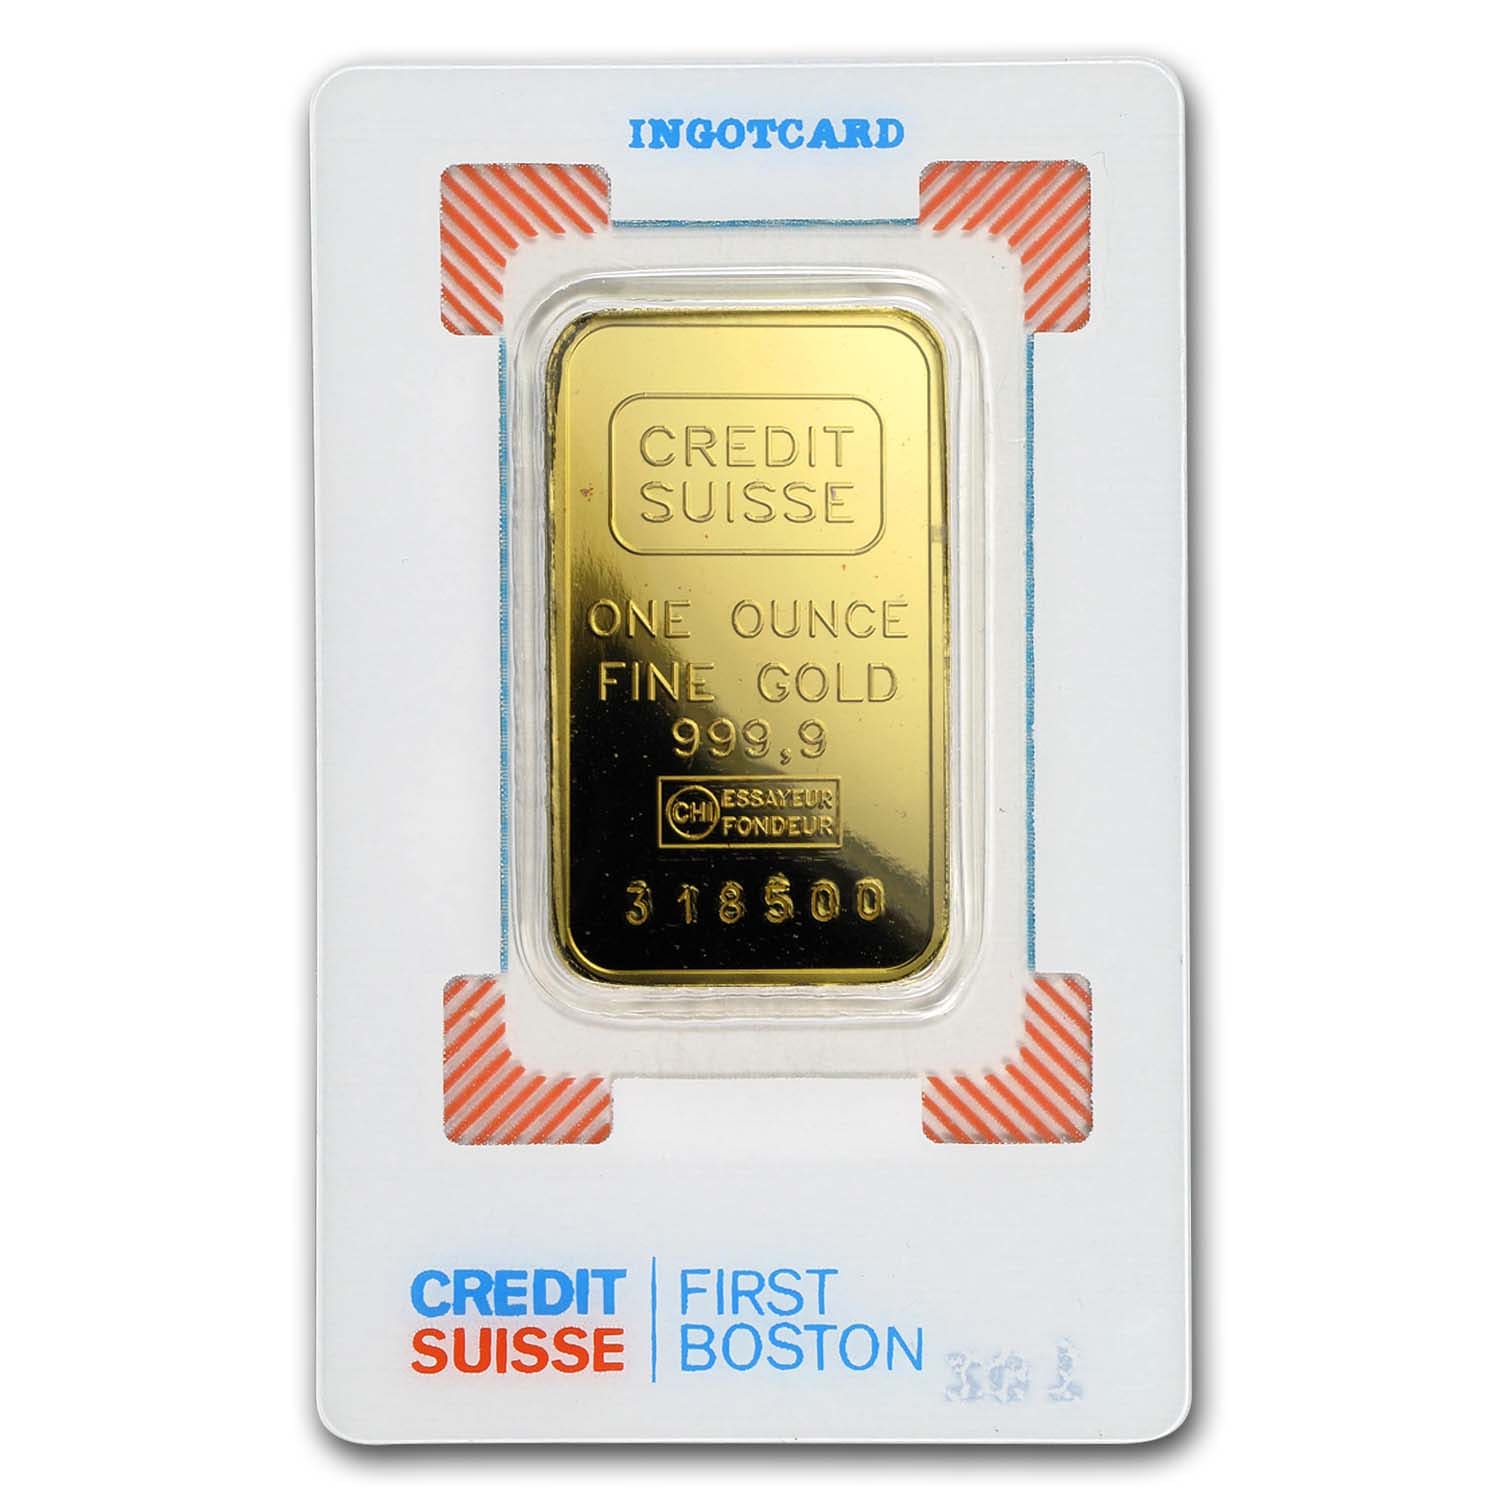 1 oz credit suisse gold bar price